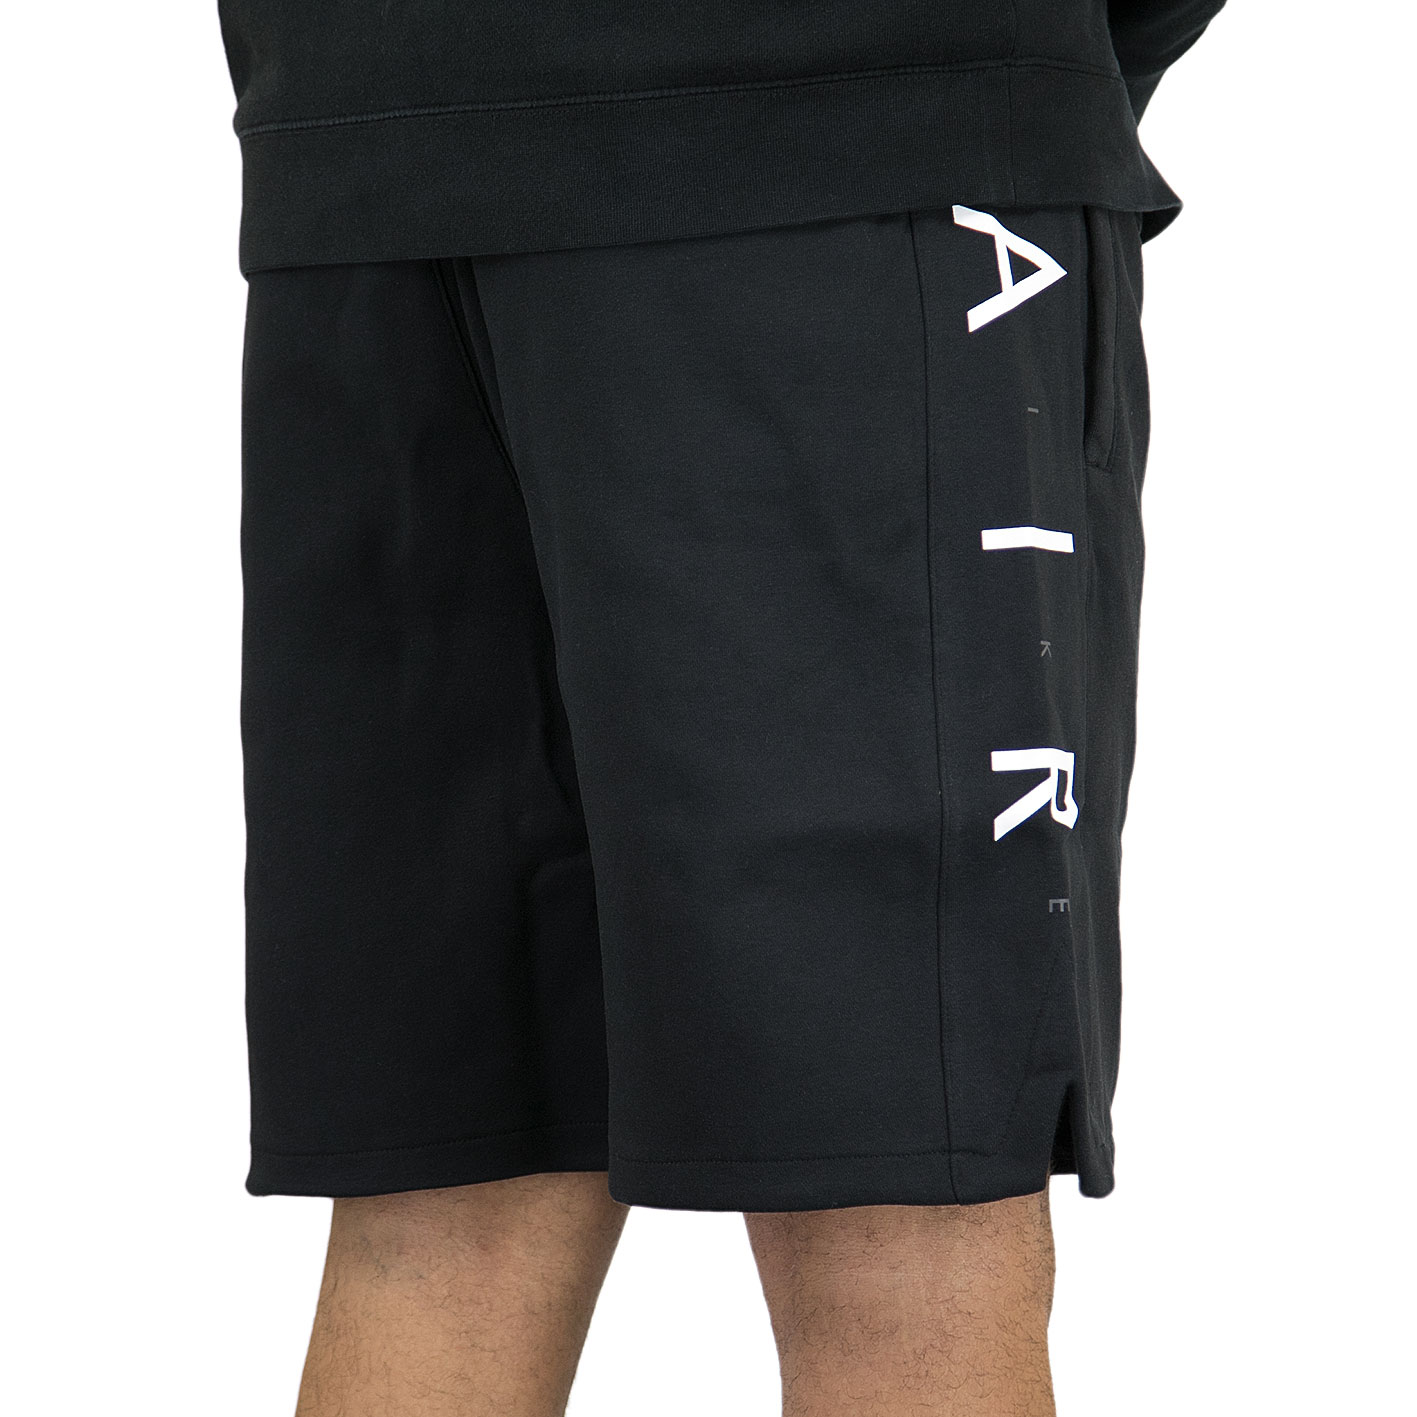 ☆ Nike Shorts Air Fleece schwarz/weiß - hier bestellen!